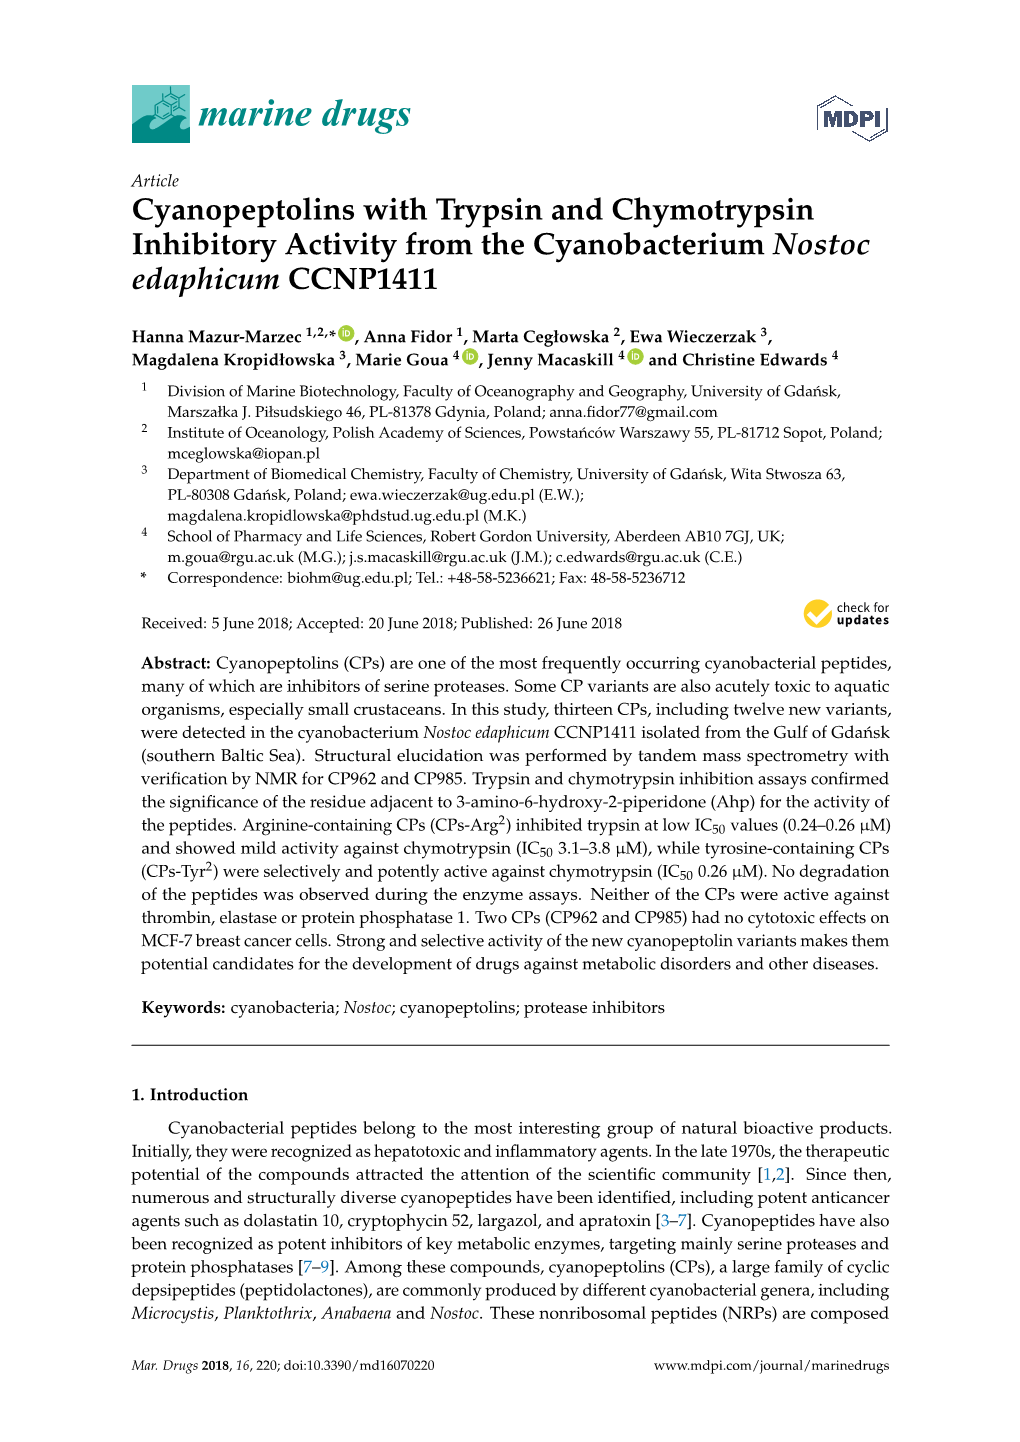 Cyanopeptolins with Trypsin and Chymotrypsin Inhibitory Activity from the Cyanobacterium Nostoc Edaphicum CCNP1411